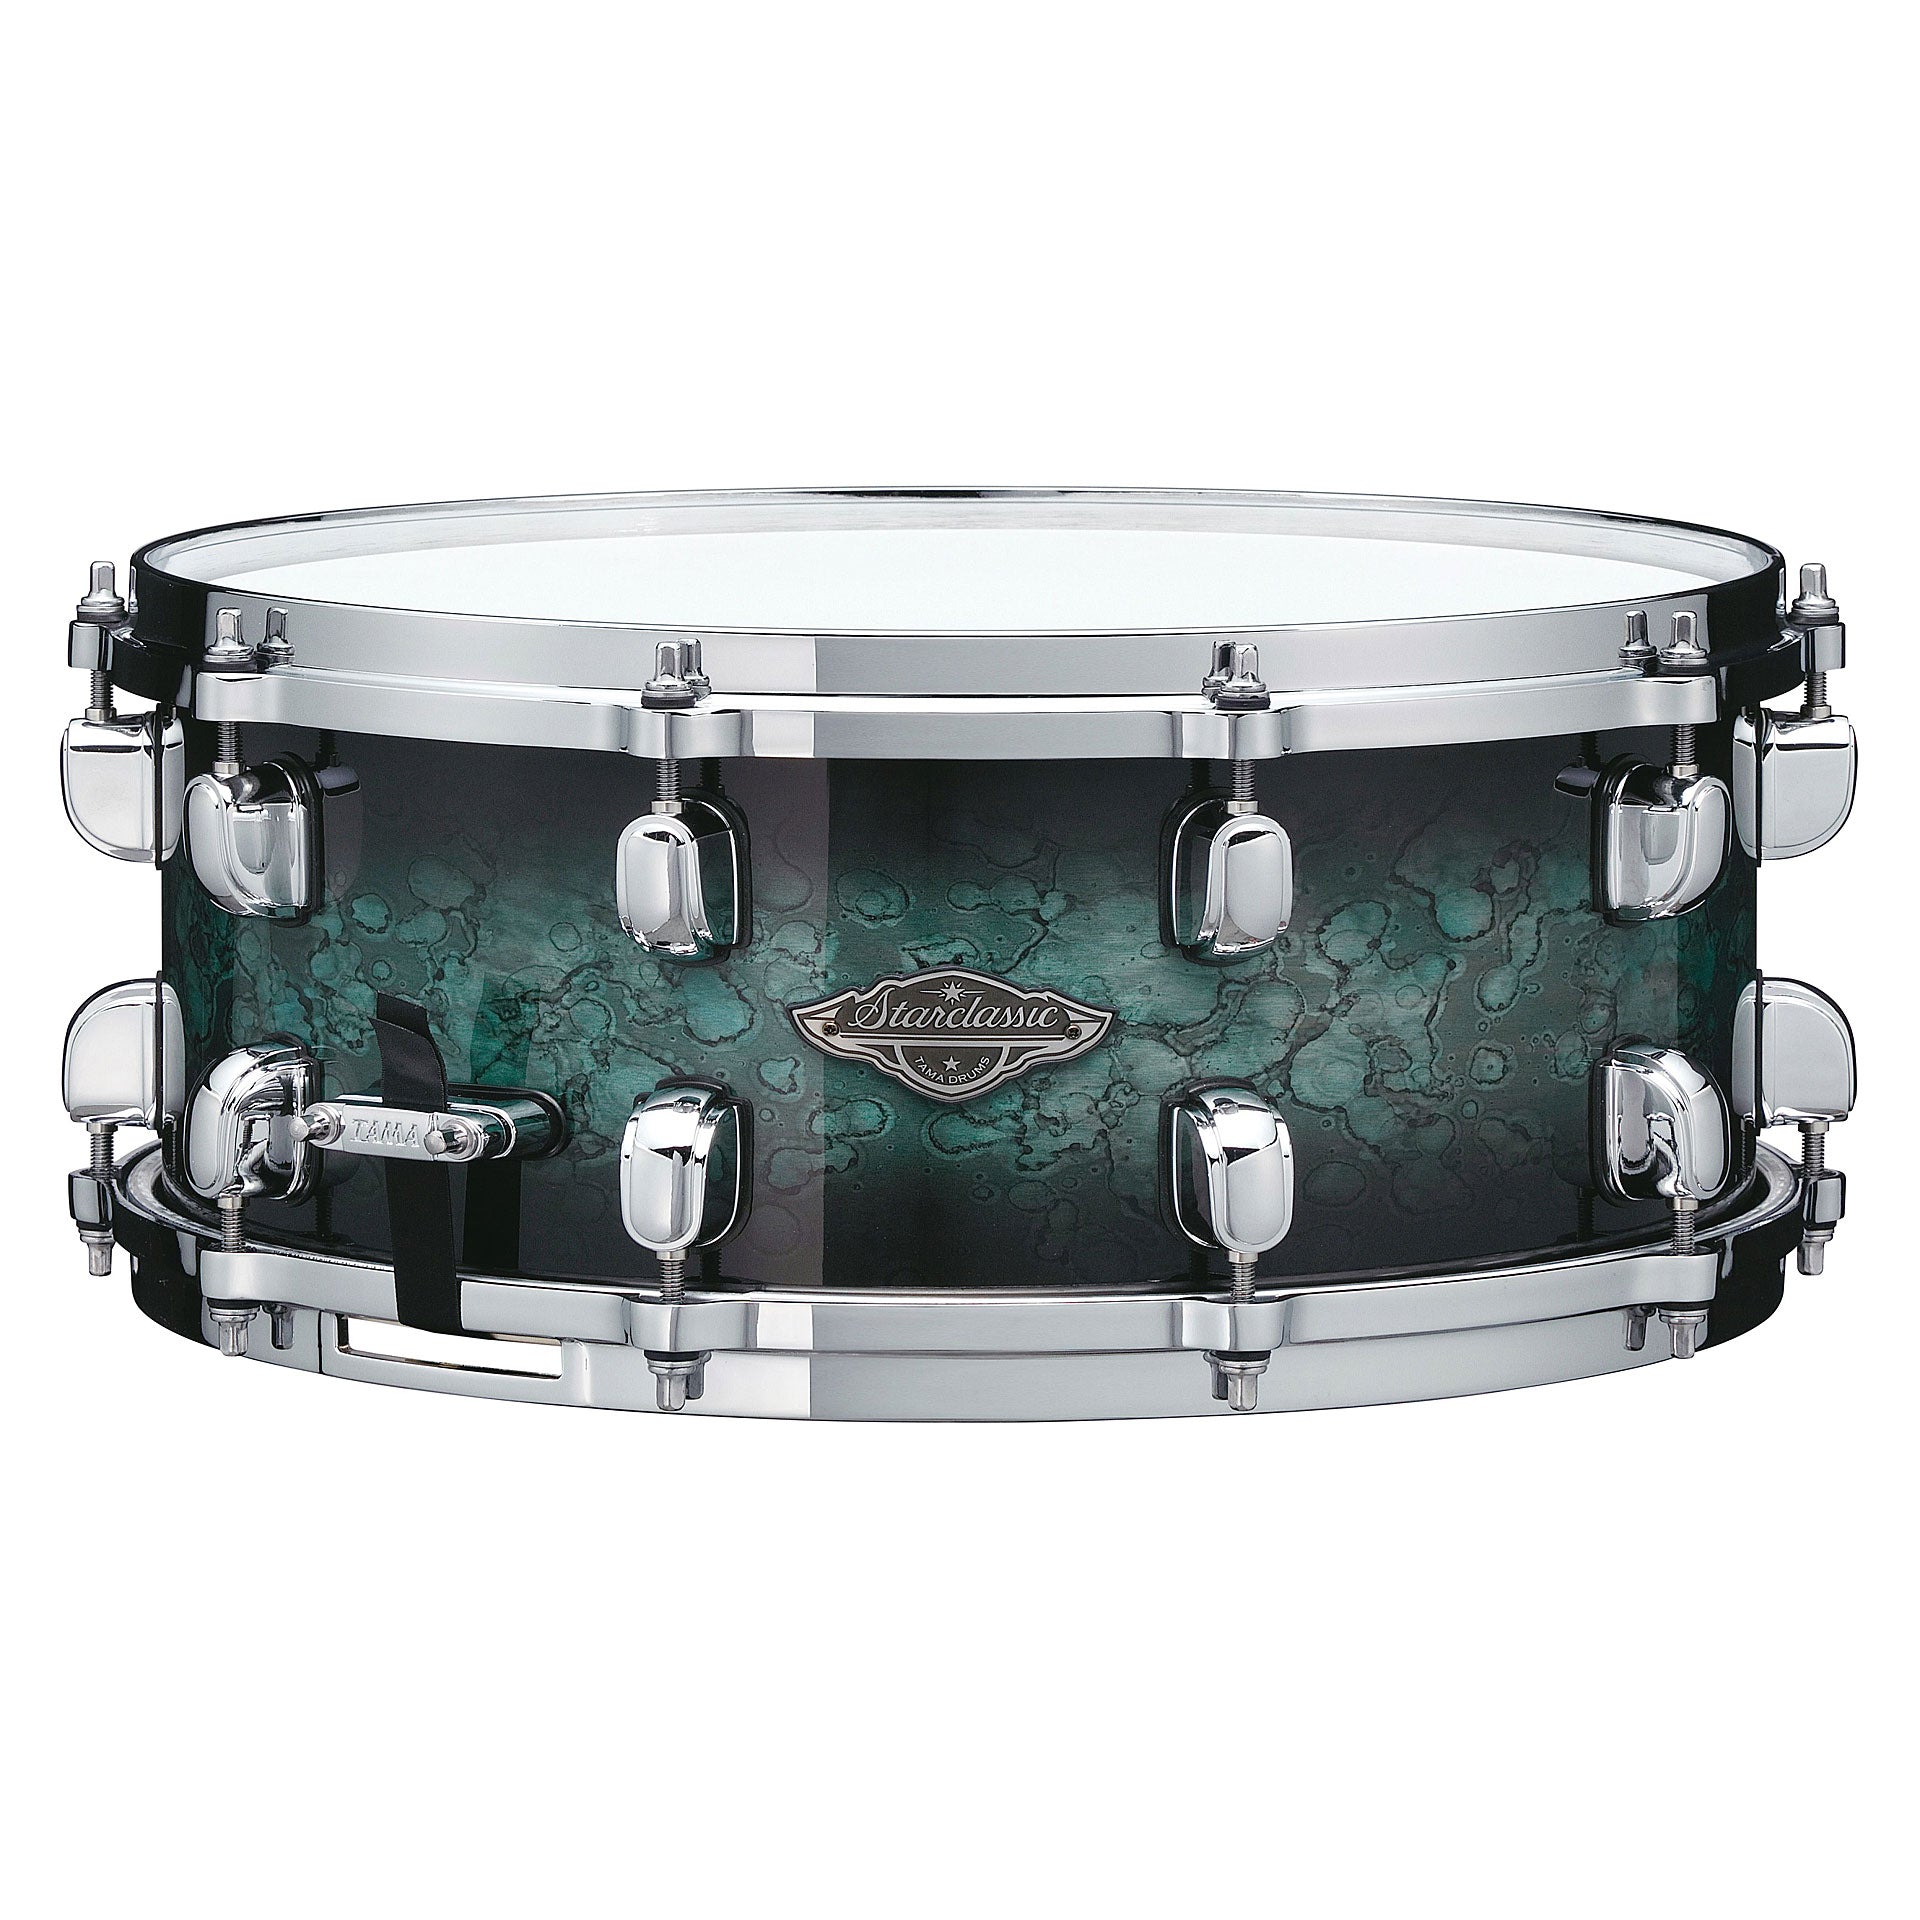 TAMA Starclassic Performer Maple/Birch  14" x 5.5" Snare Drum (Molten Steel Blue)